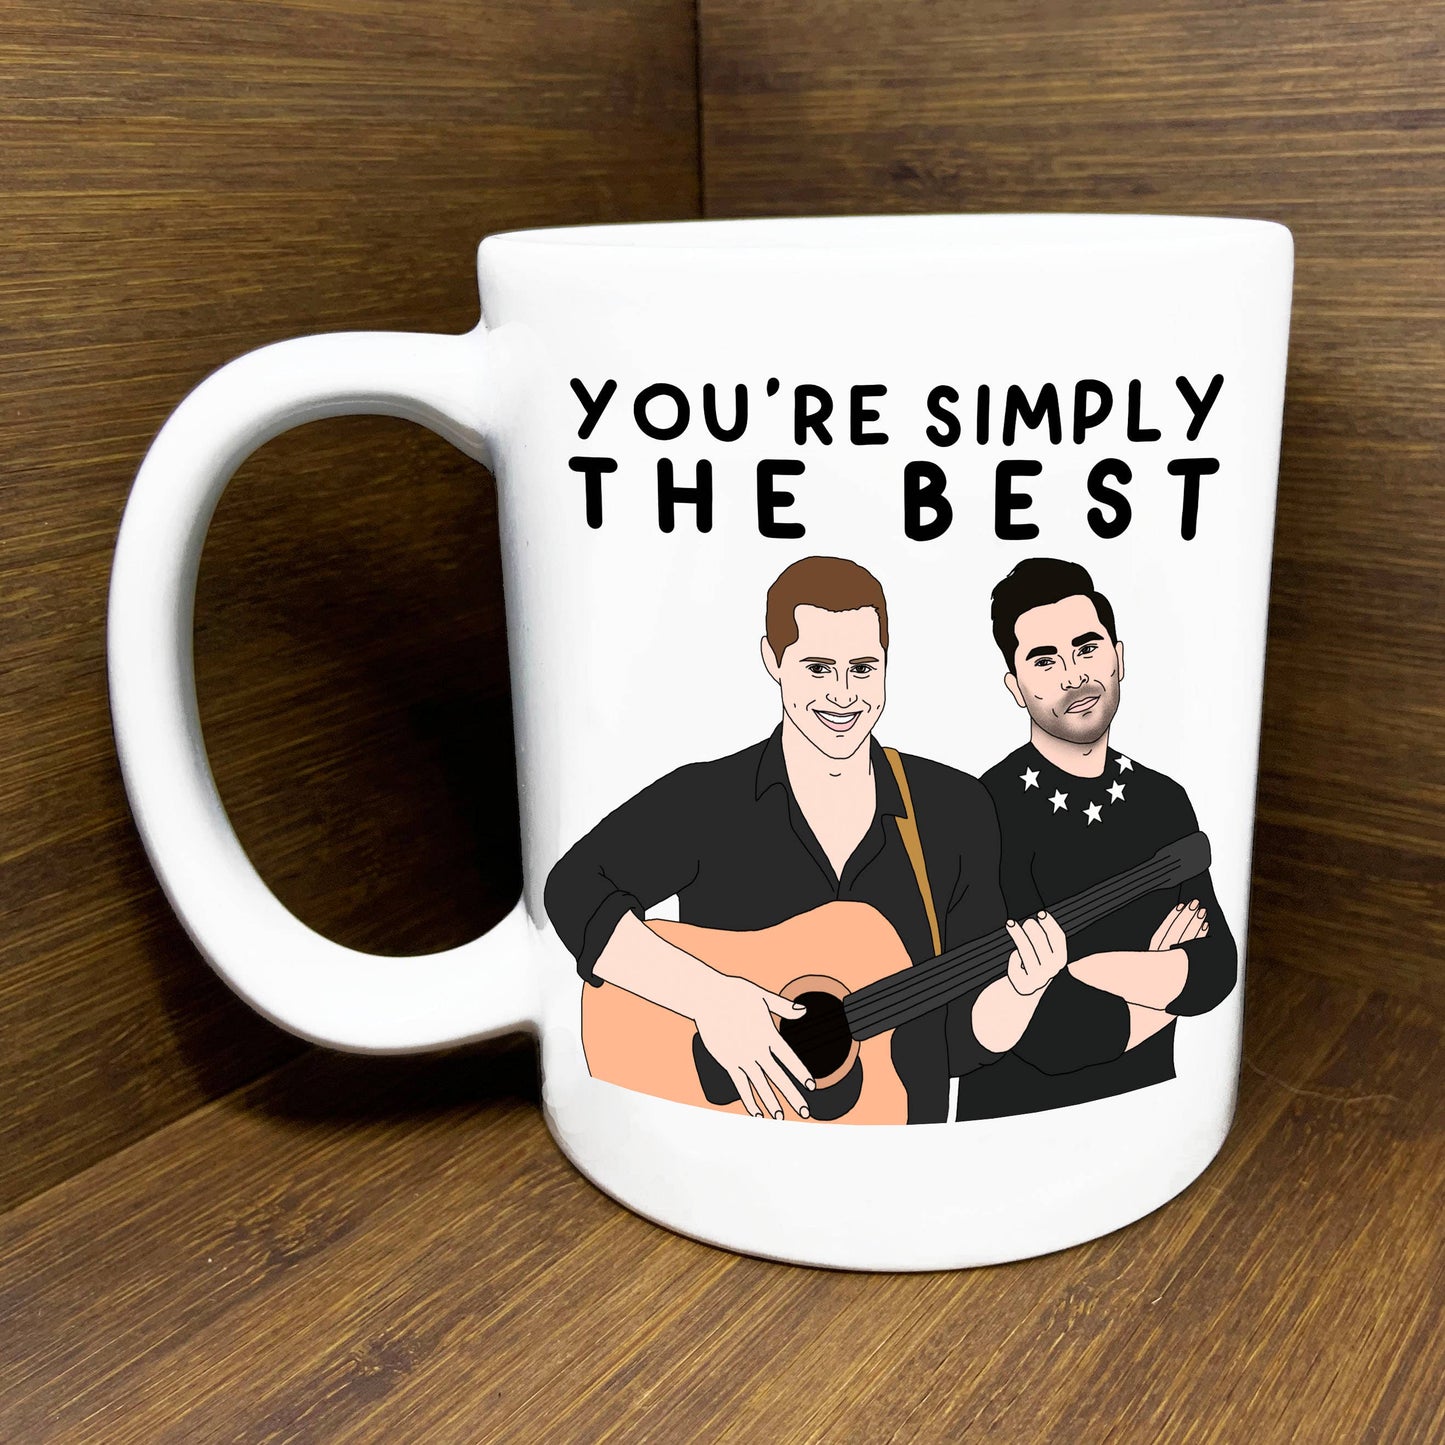 Simply the Best Mug